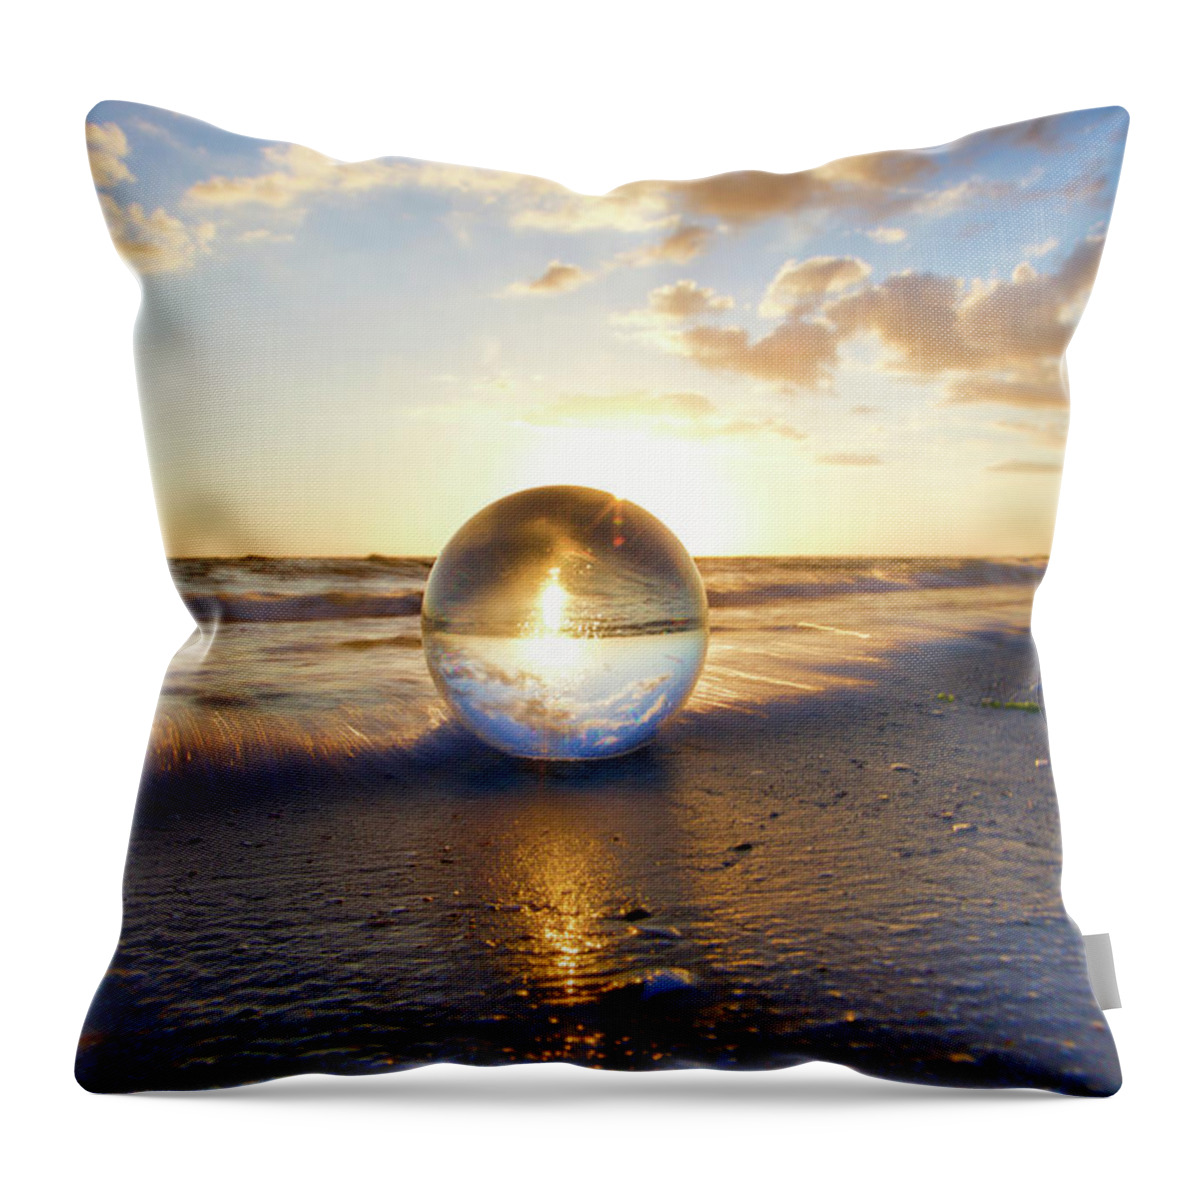 South Florida Throw Pillow featuring the photograph Beach Ball by Nunweiler Photography